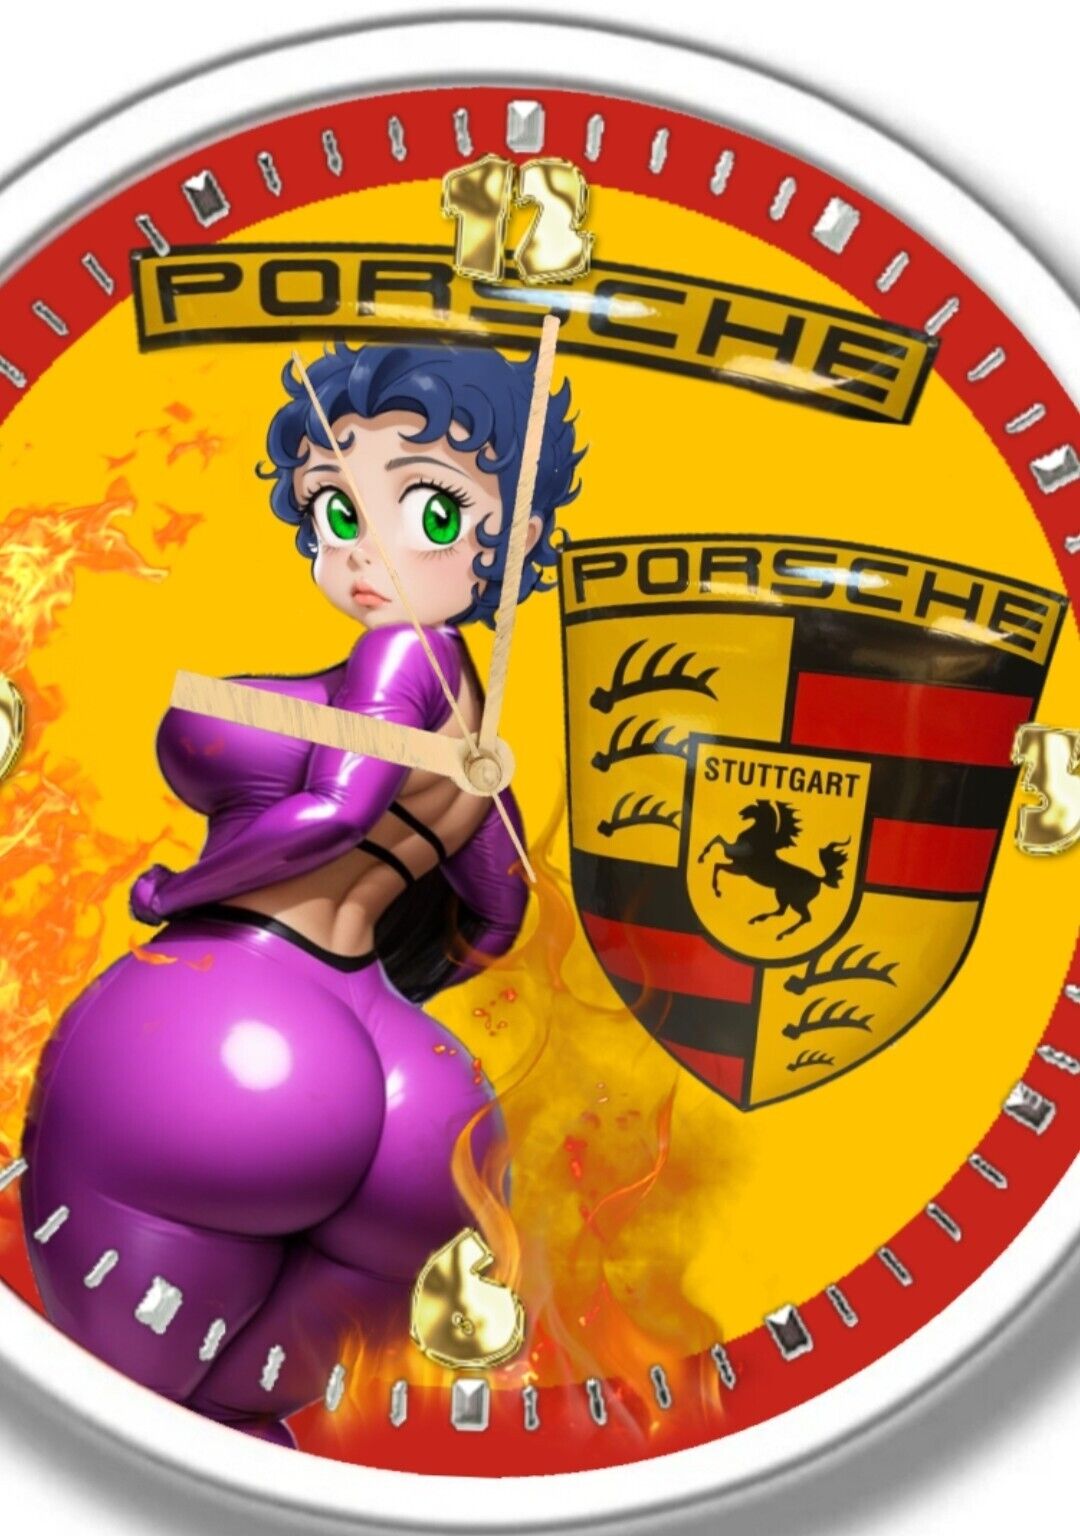 Porsche Betty Boop Clock Free Personalization 